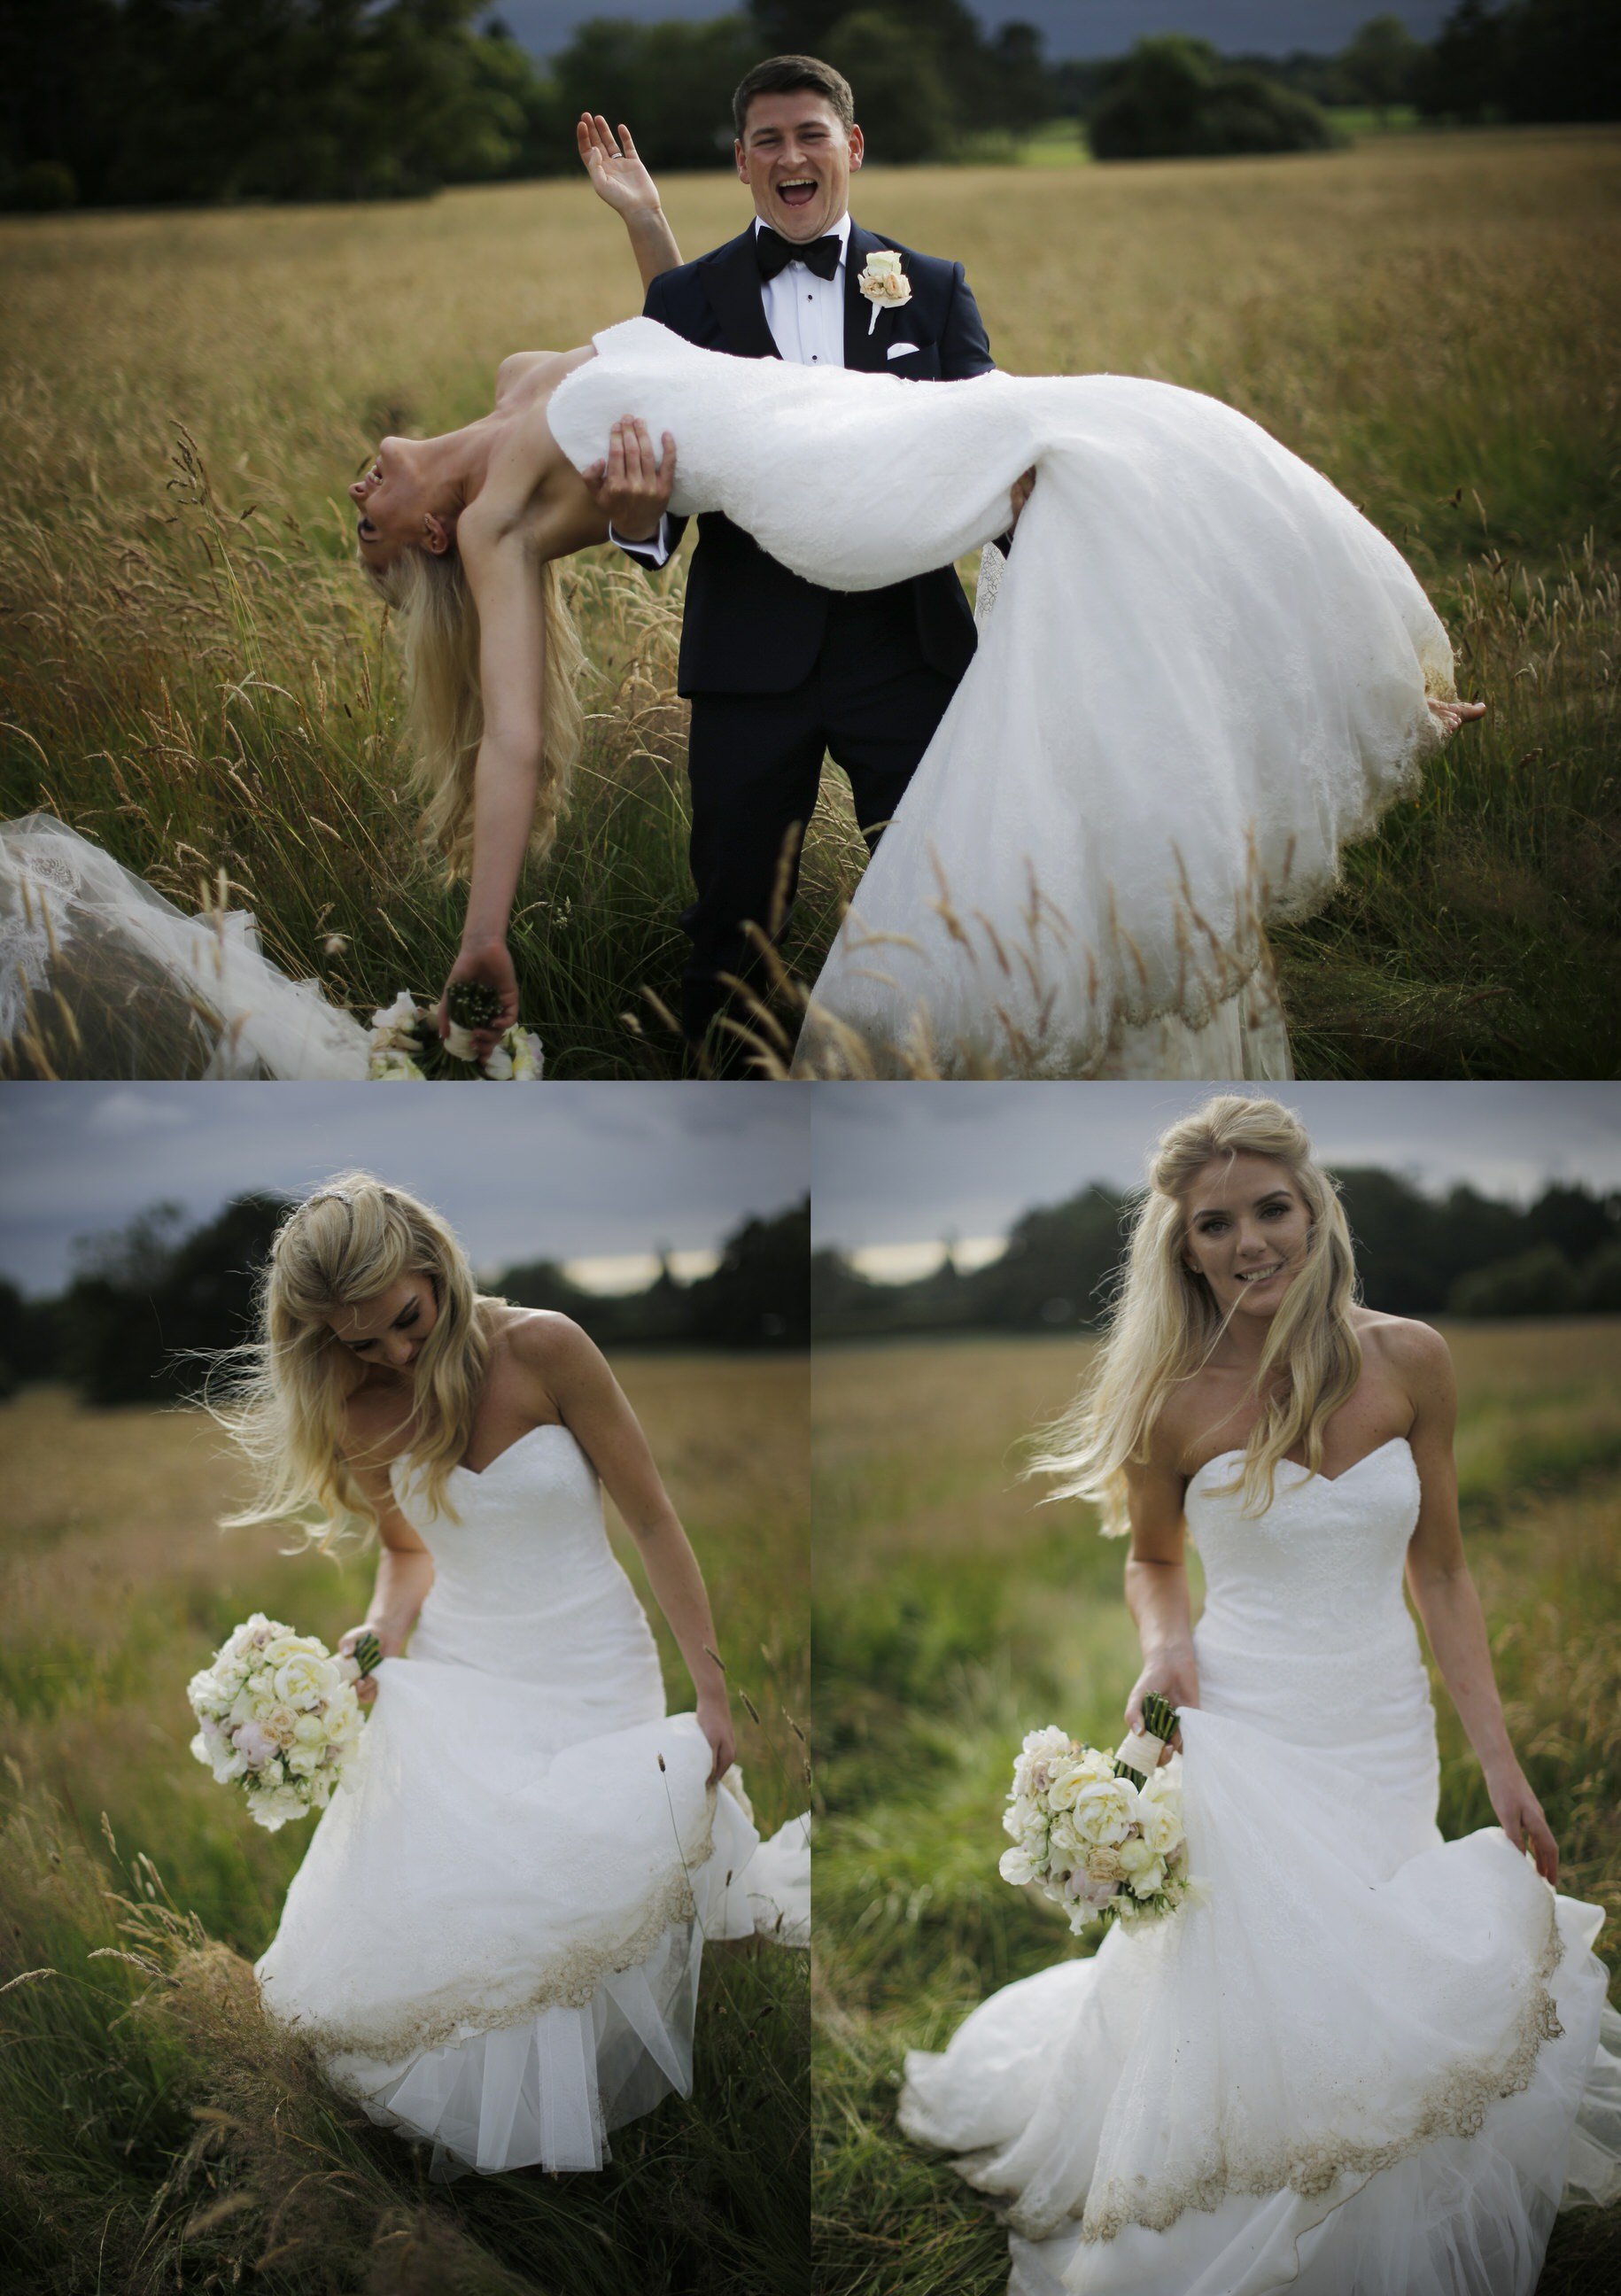 thornton-manor-weding-photographer-wedding-photography-brett-harkness-cheshire-wedding-photographer026_.jpg